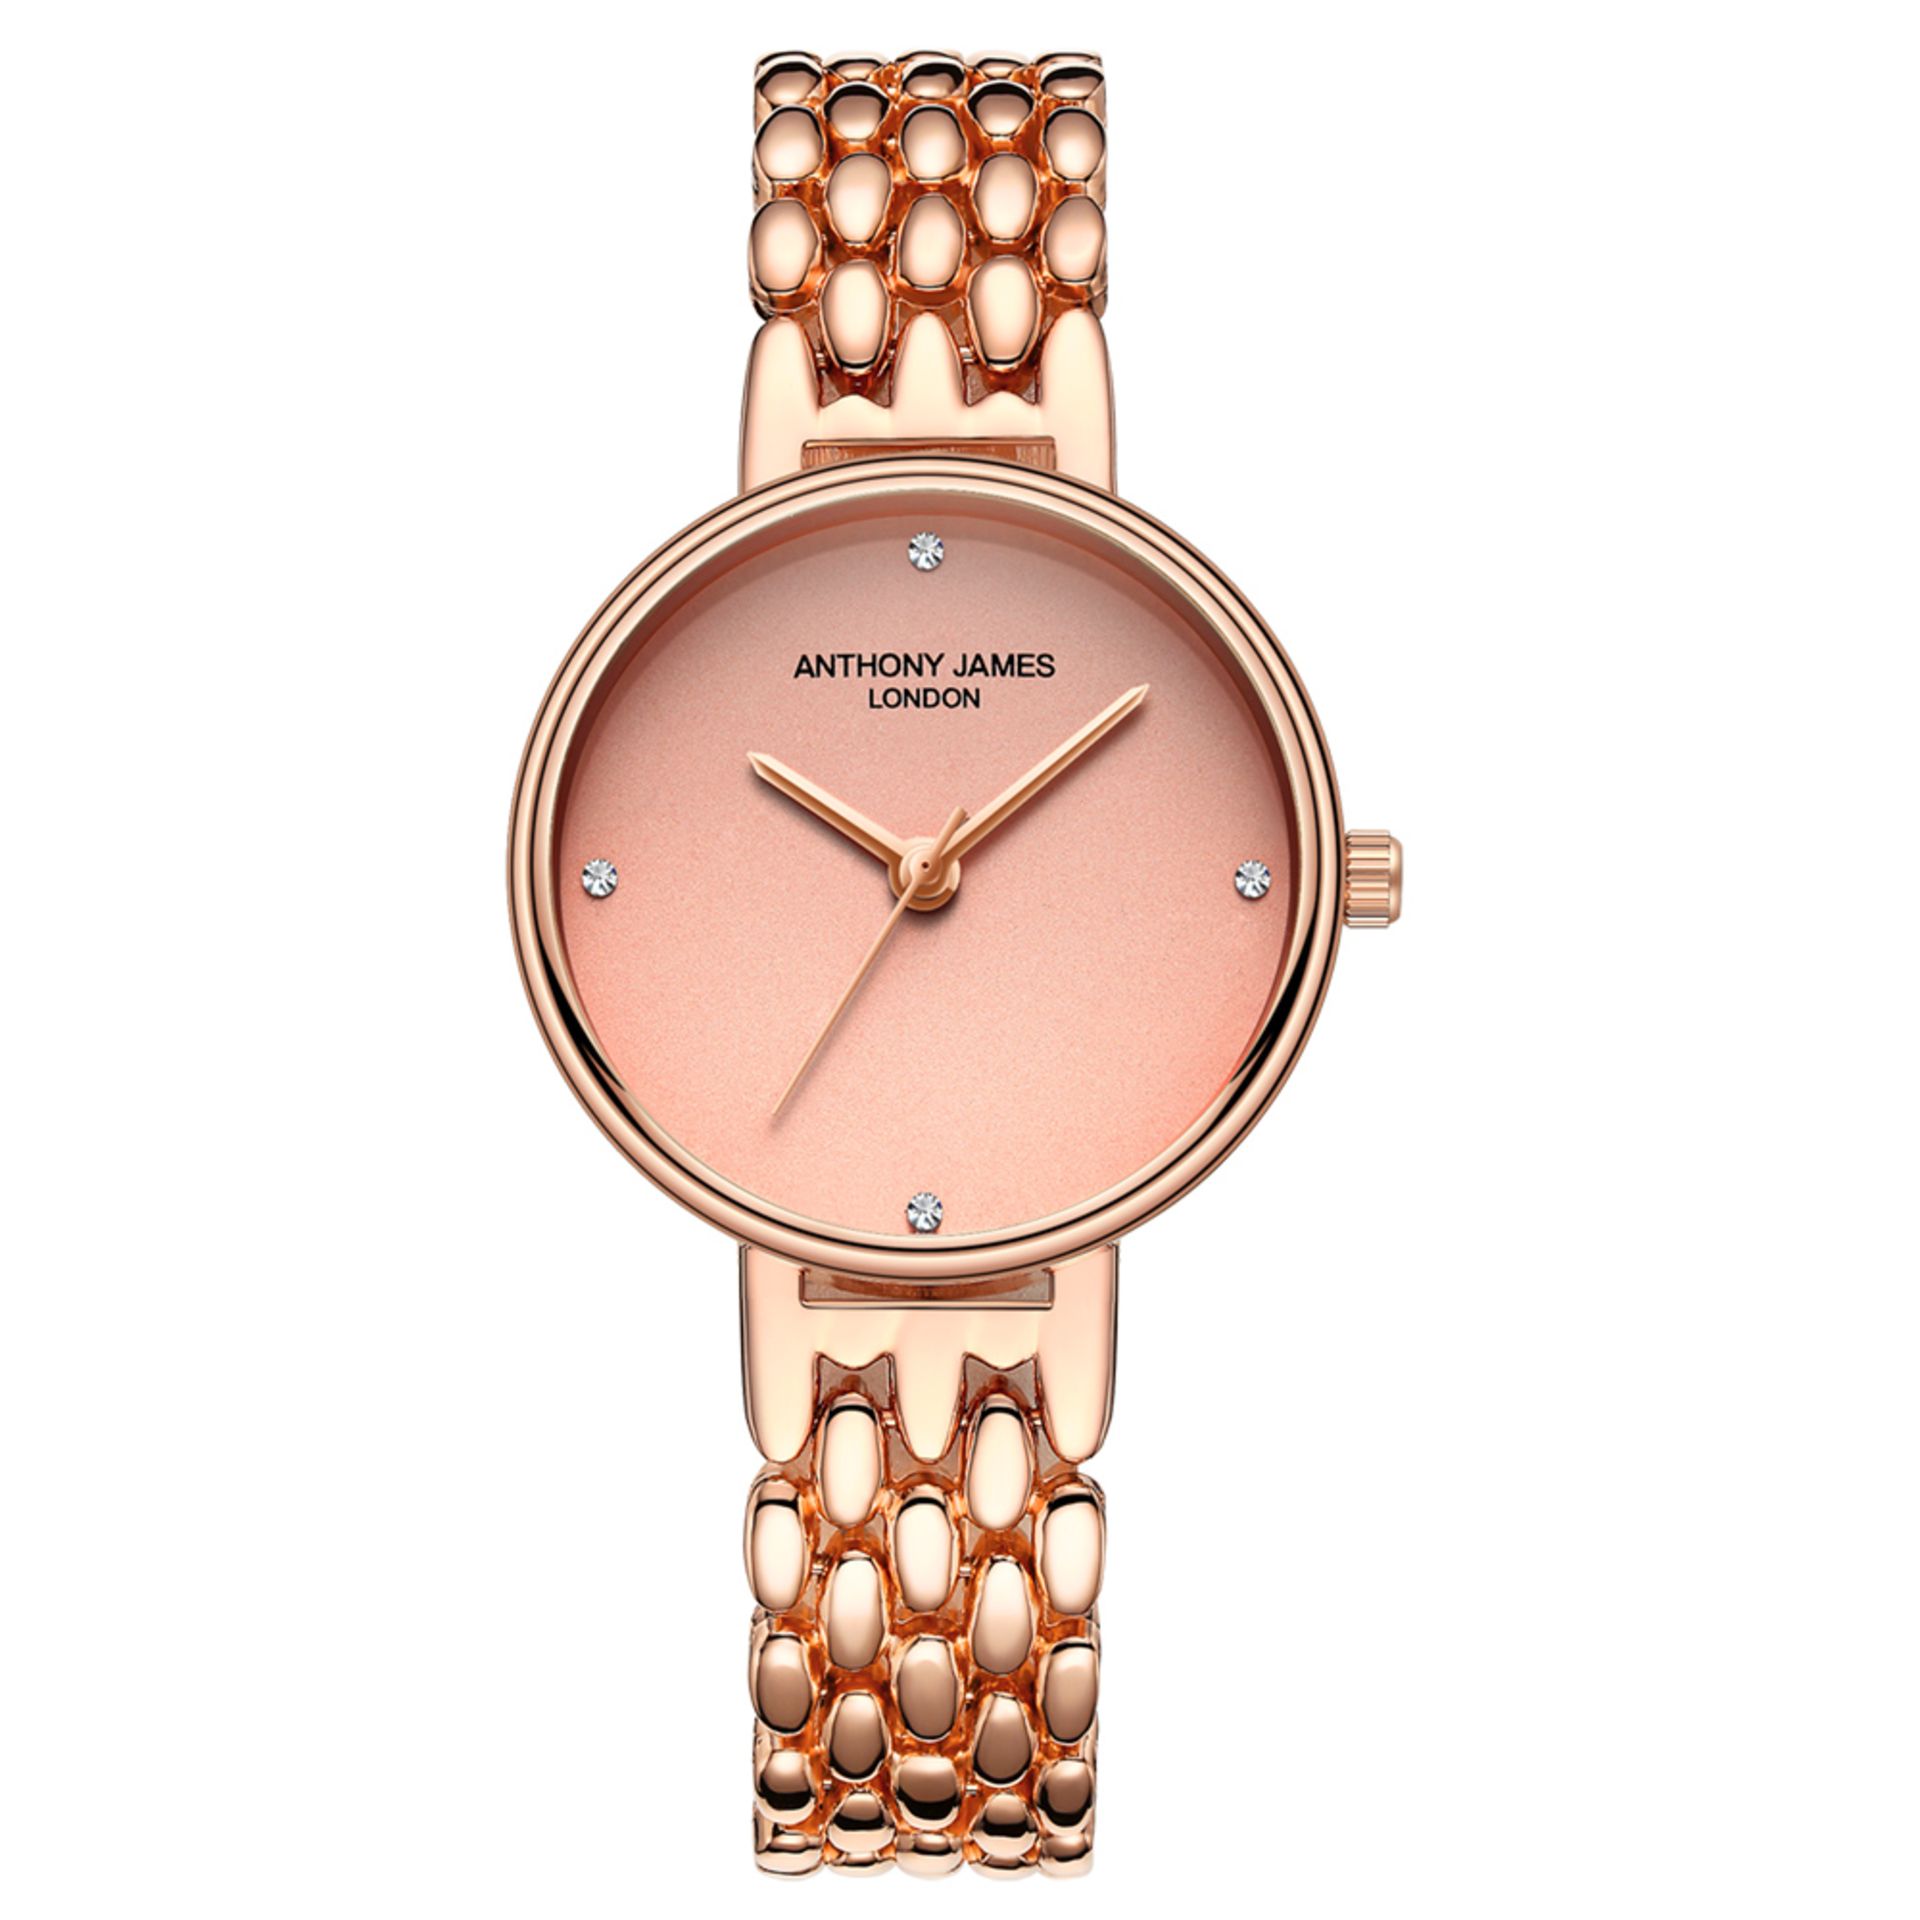 V Brand New Anthony James Ladies Belgravia Rose Gold Finished Watch Set With Swarovski Diamond